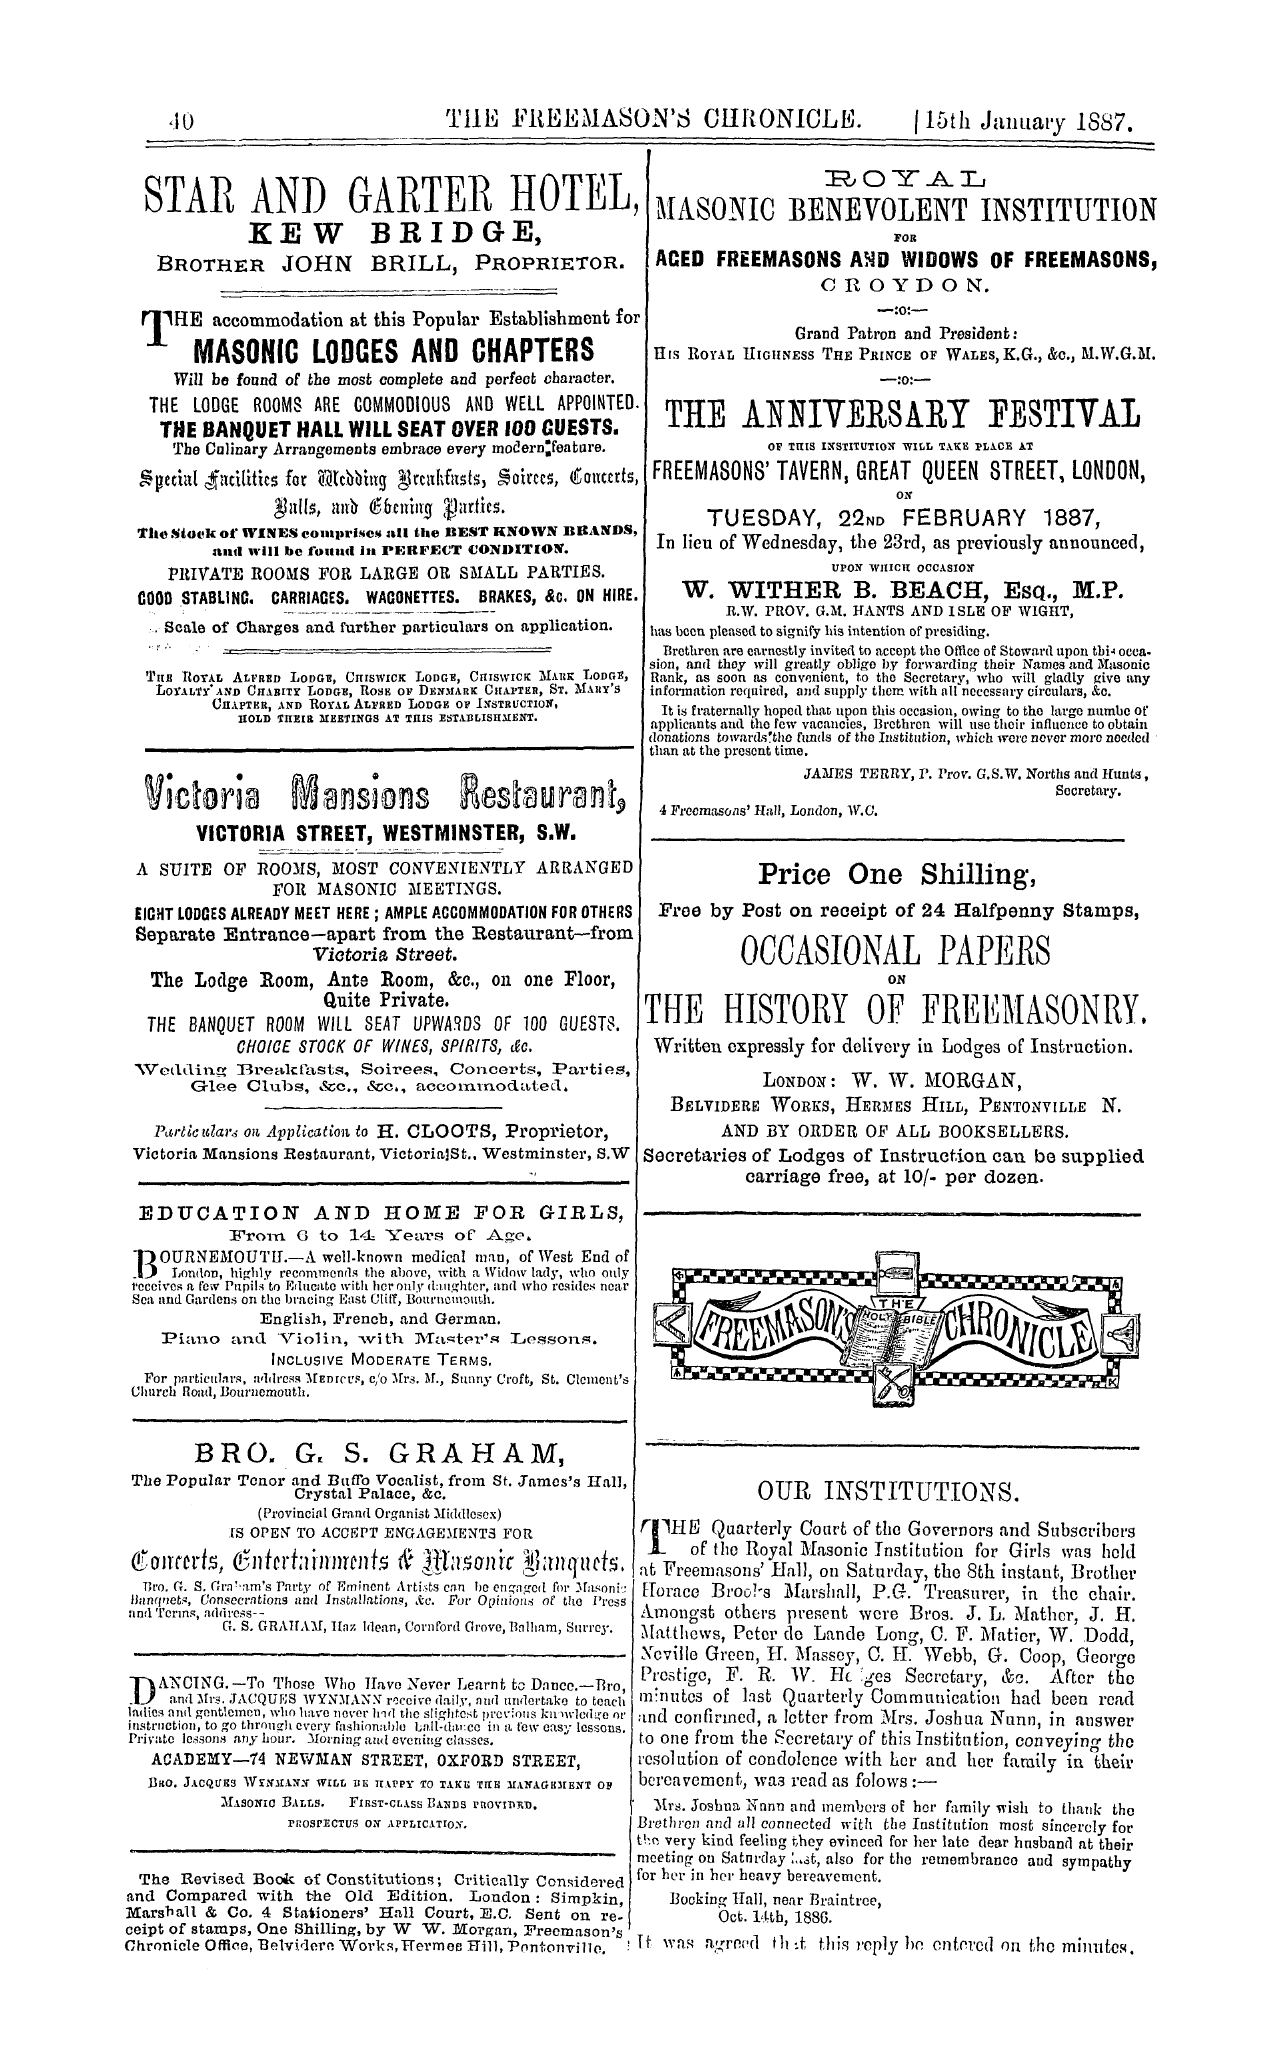 The Freemason's Chronicle: 1887-01-15: 8